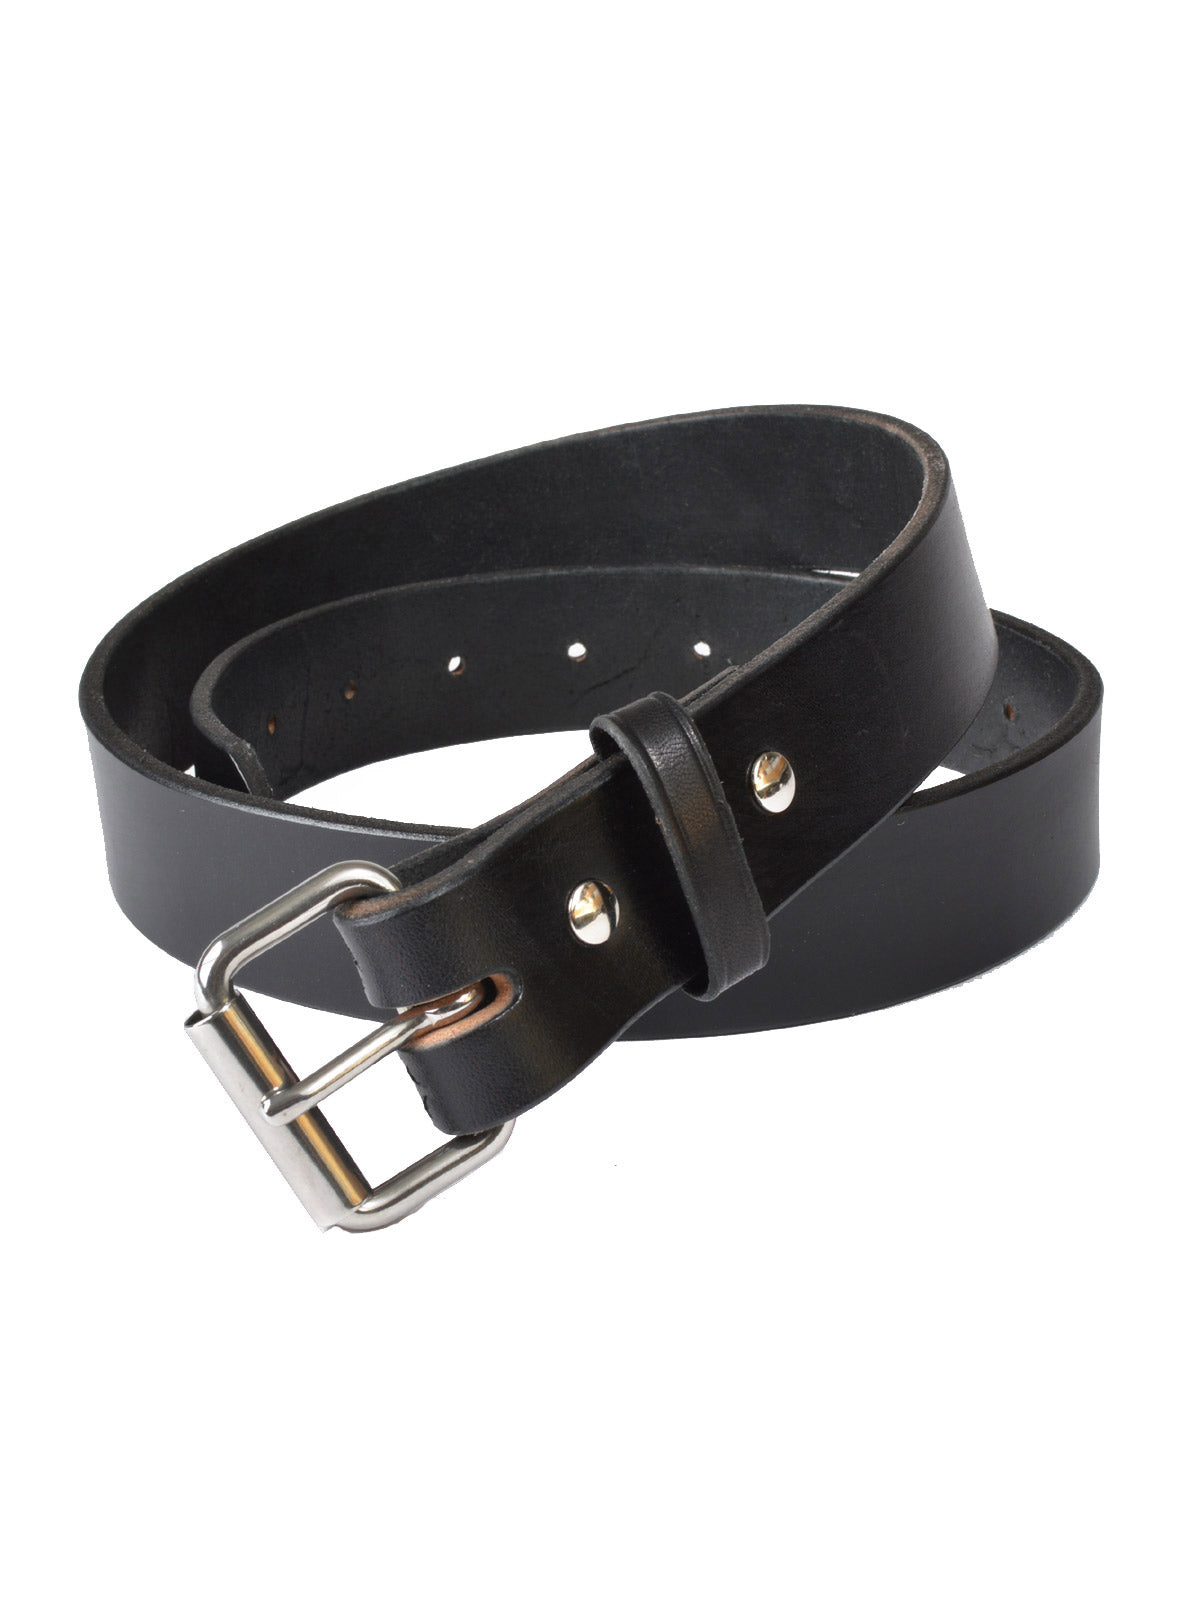 P&B Harness Full Grain Leather Belts in Black 305-B-BLK - Big Man Sizes